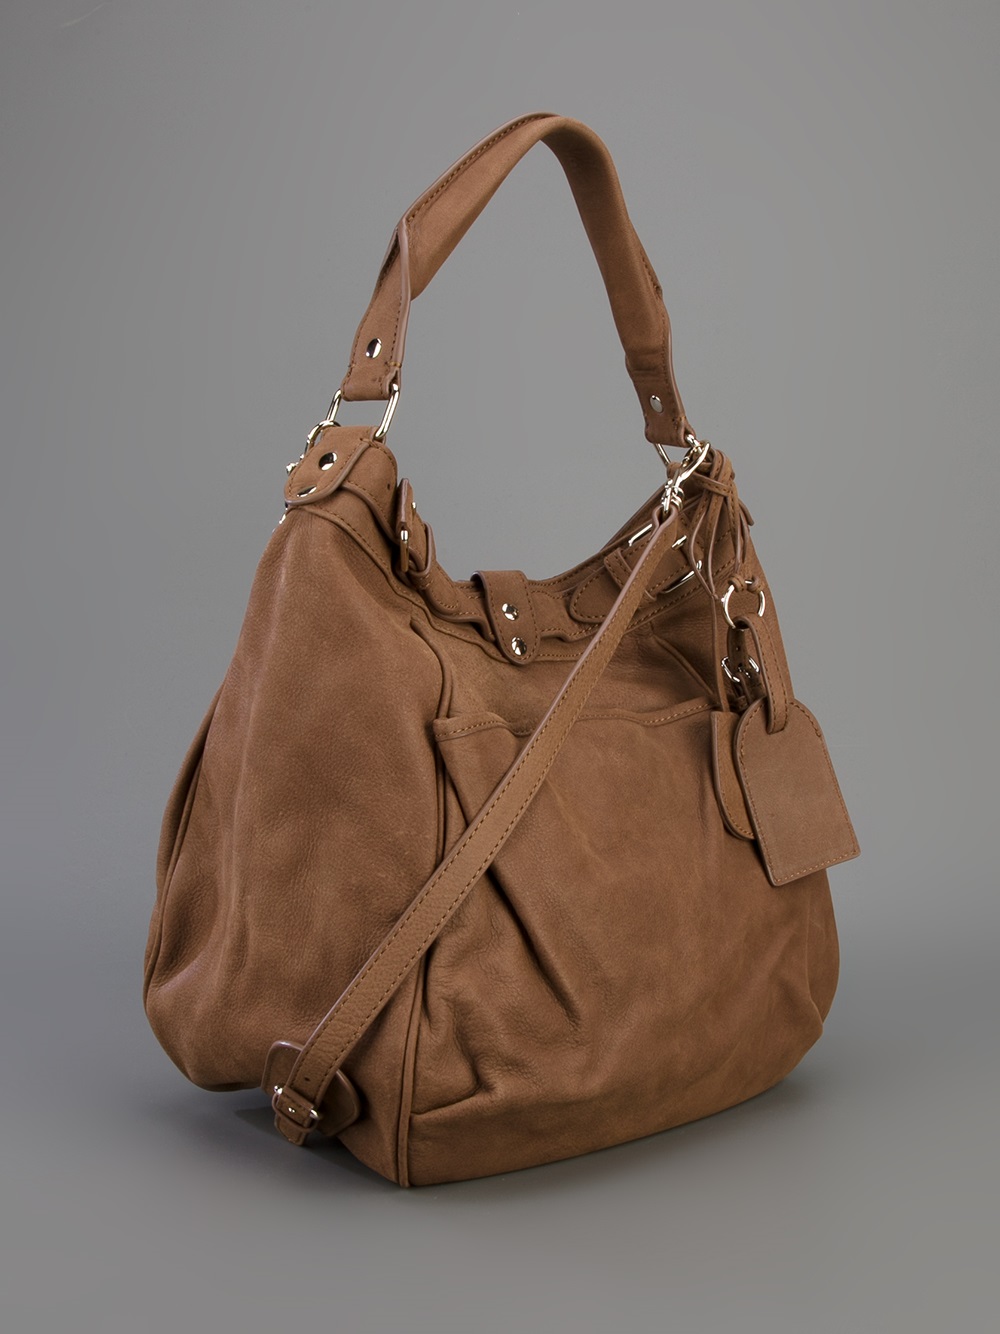 Lyst - Vanessa Bruno Lune Bag in Brown